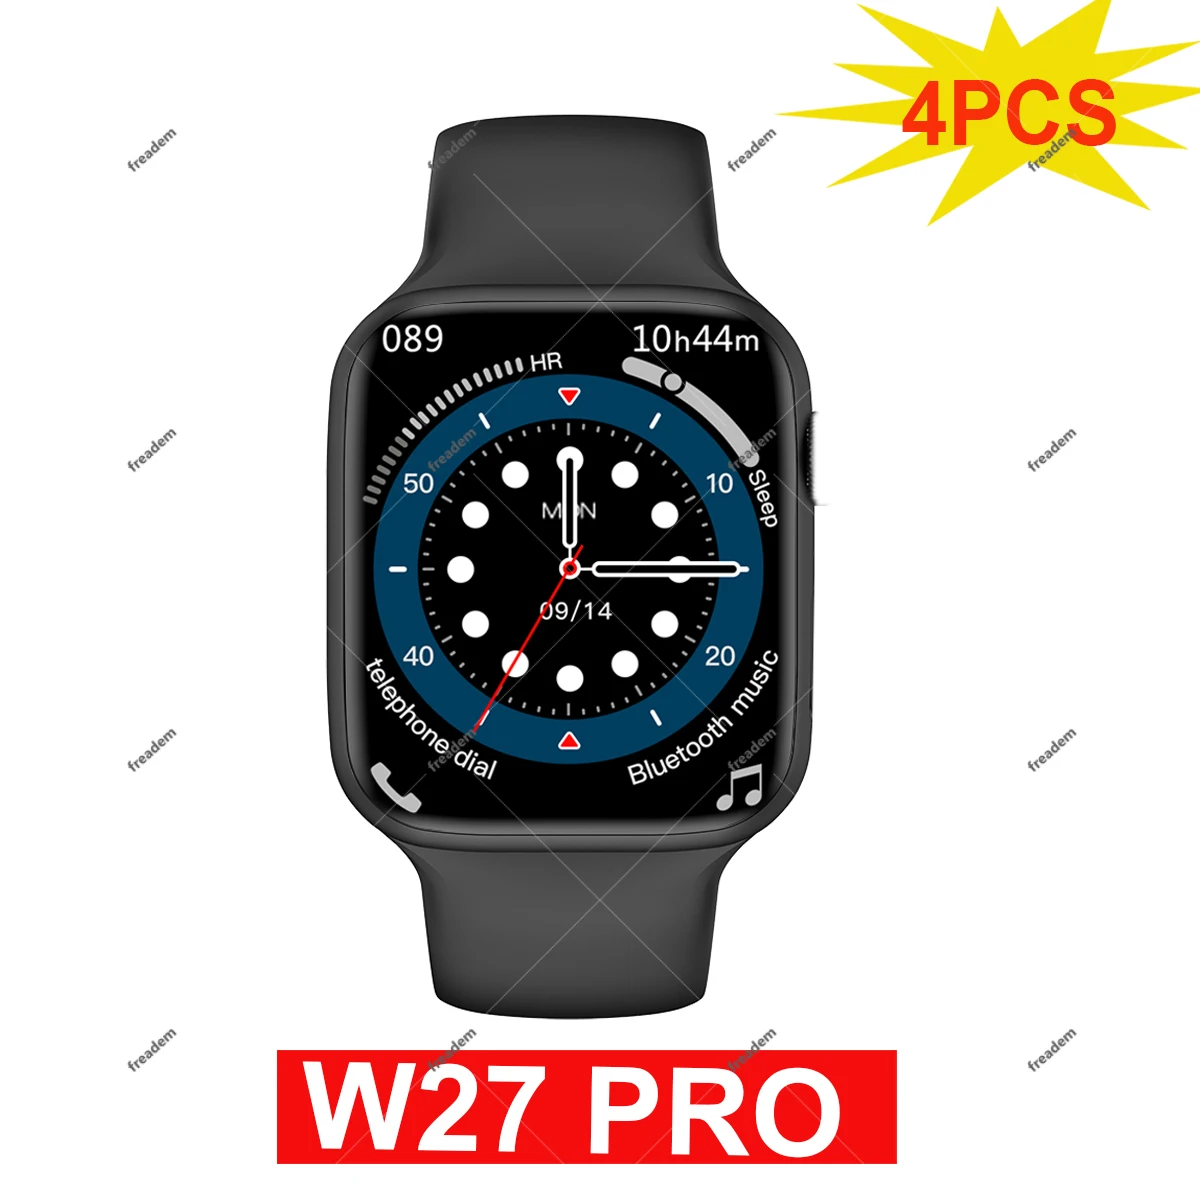 4PCS W27 PRO Smart Watch